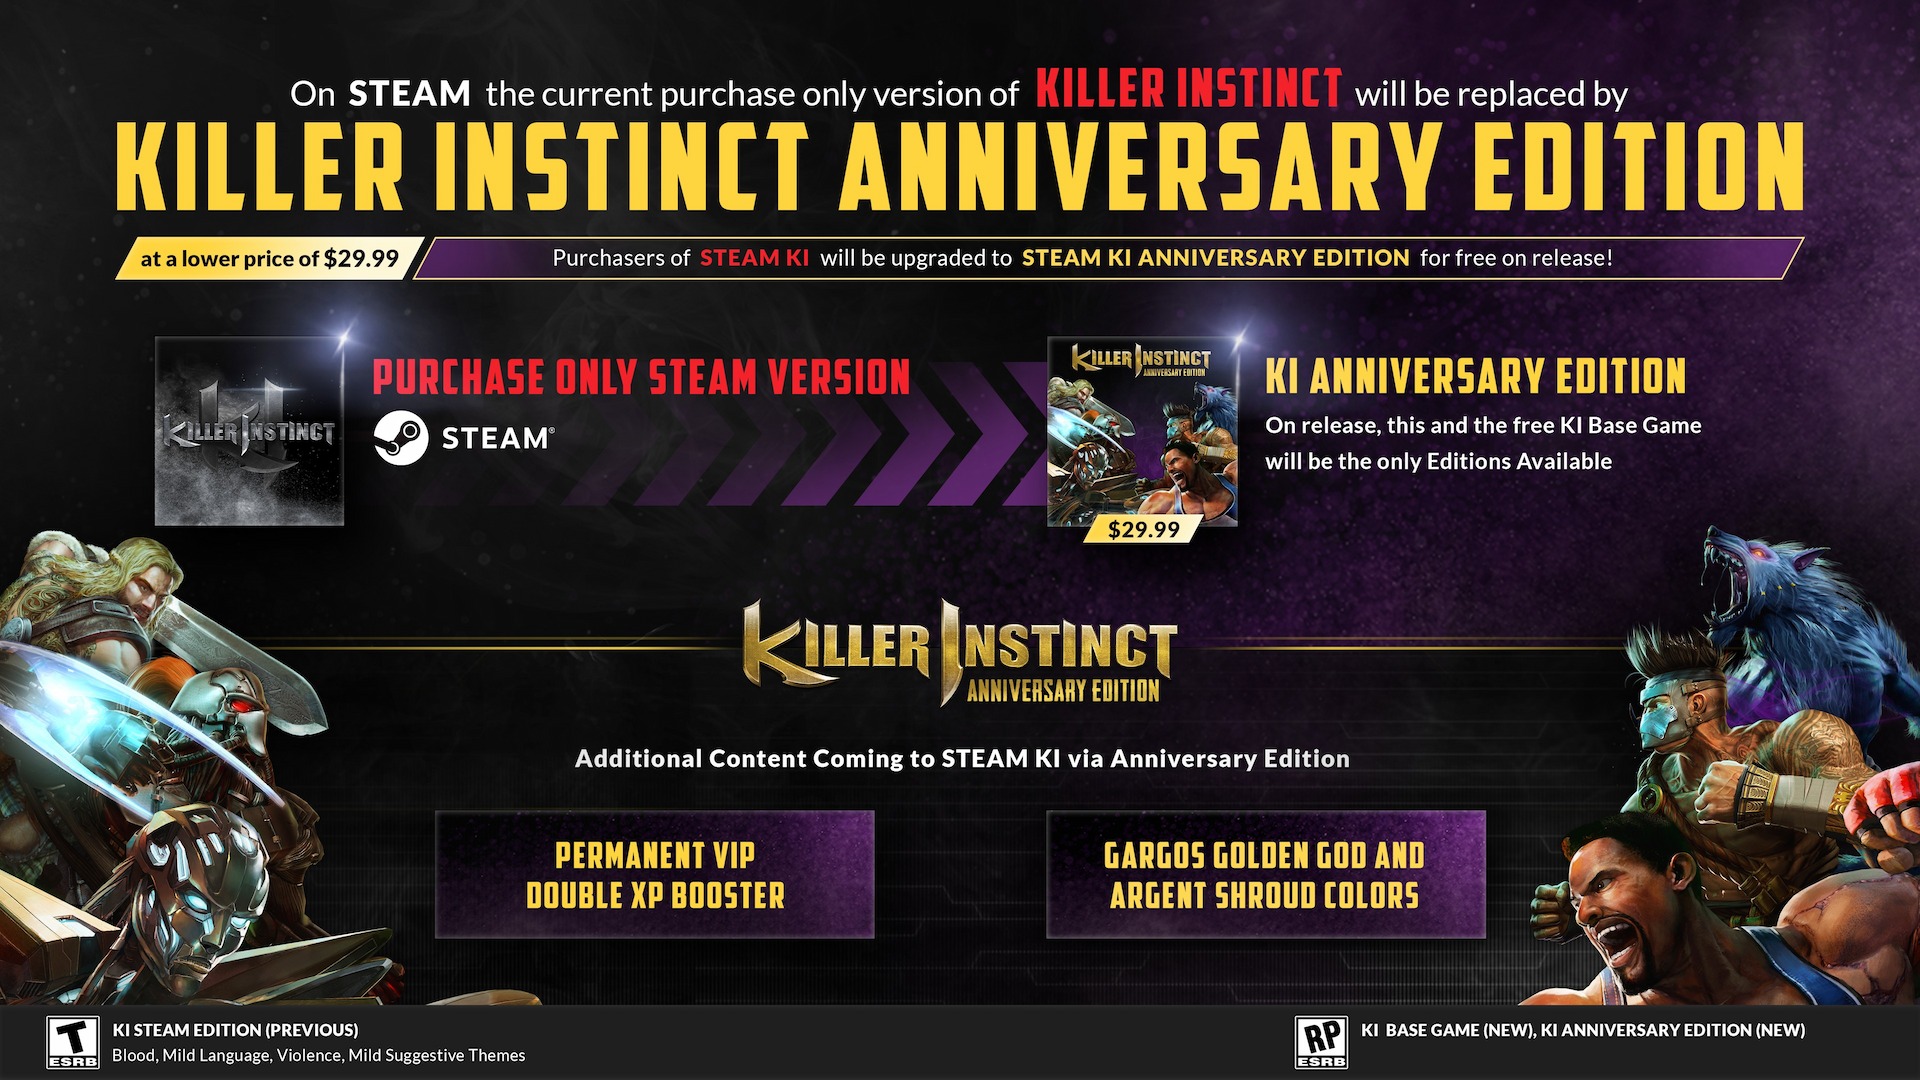 Killer Instinct informational picture from developer showcasing details regarding the Steam edition